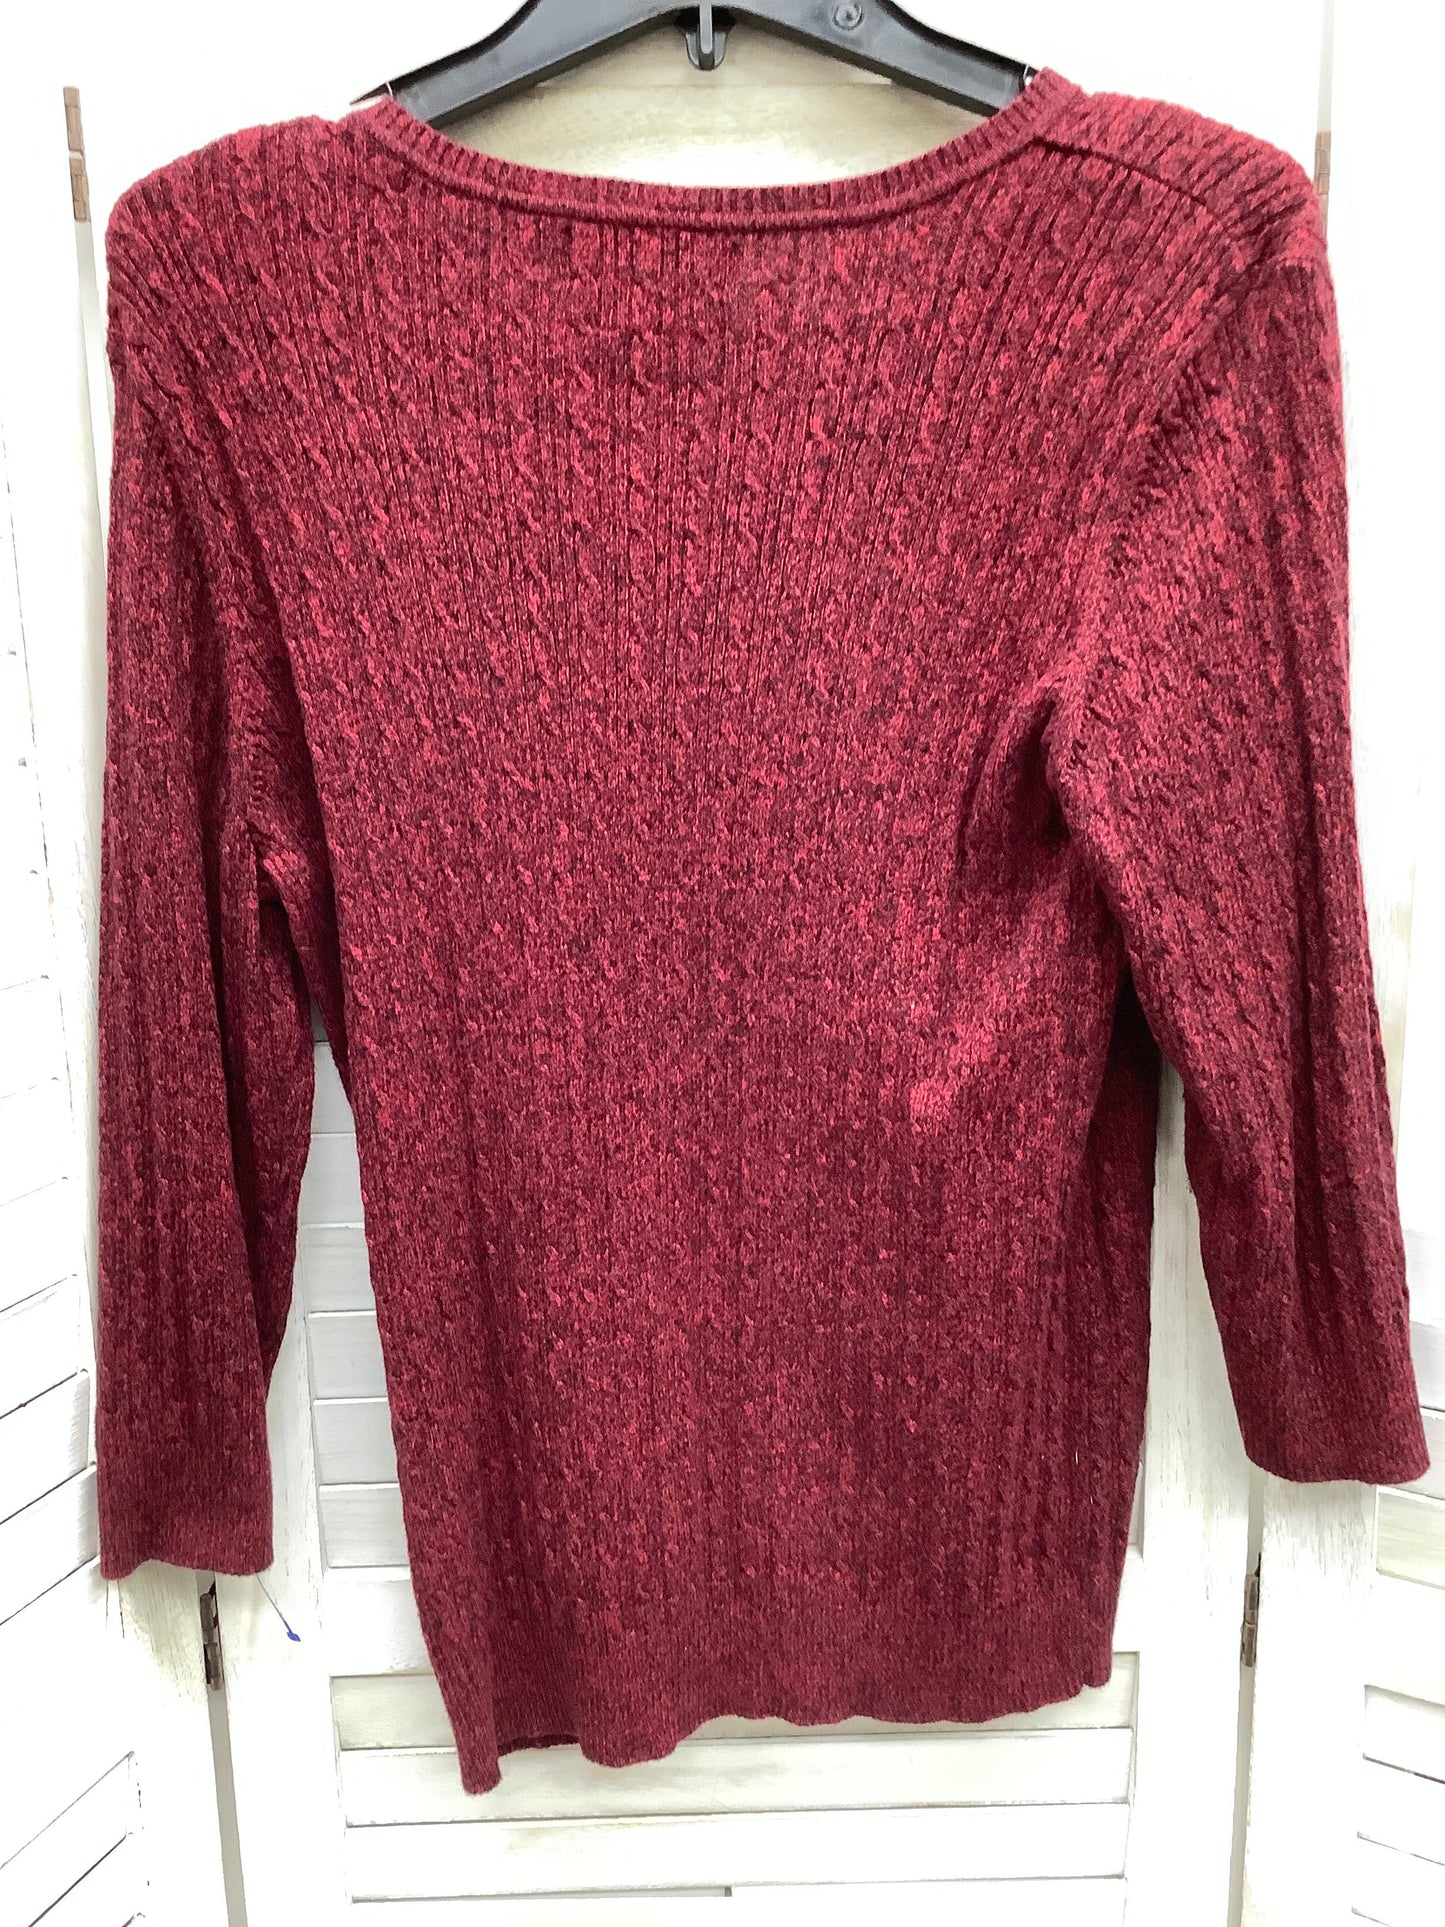 Sweater By Karen Scott  Size: S